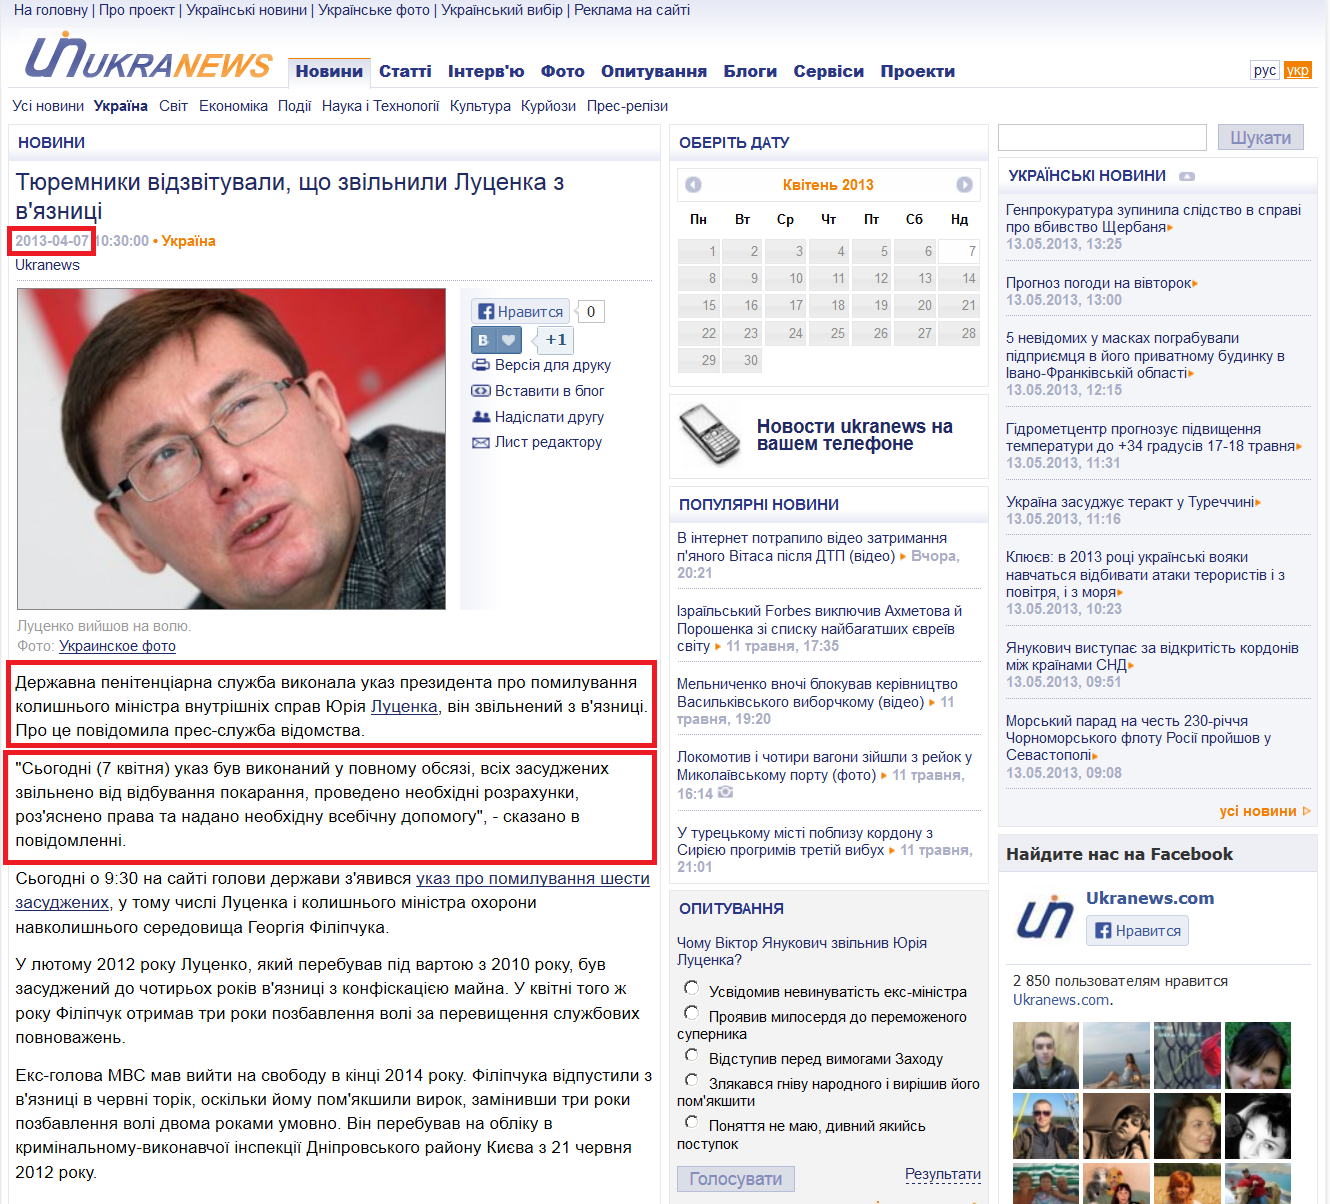 http://ukranews.com/uk/news/ukraine/2013/04/07/93643